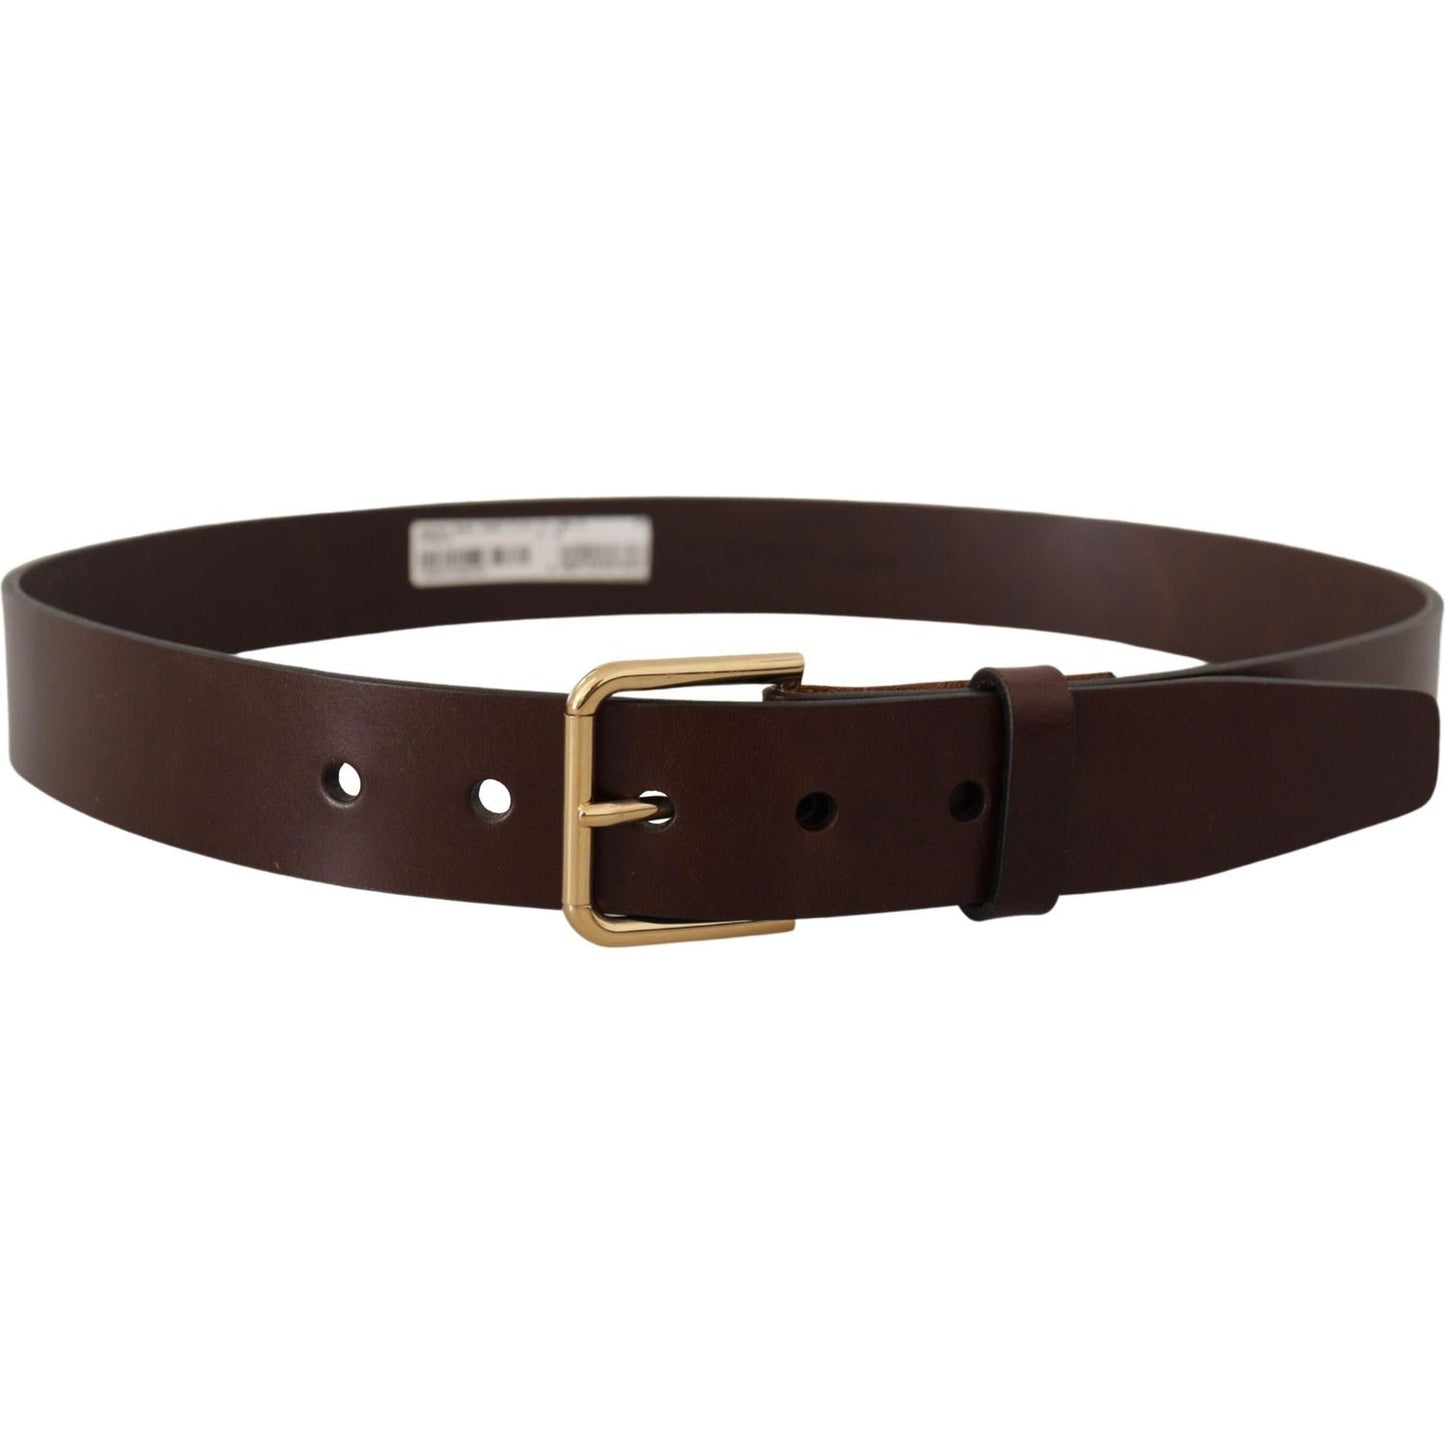 Dolce & Gabbana Elegant Black Leather Belt with Metal Buckle brown-polished-leather-gold-tone-metal-buckle-belt IMG_7160-scaled-3a048482-20d.jpg